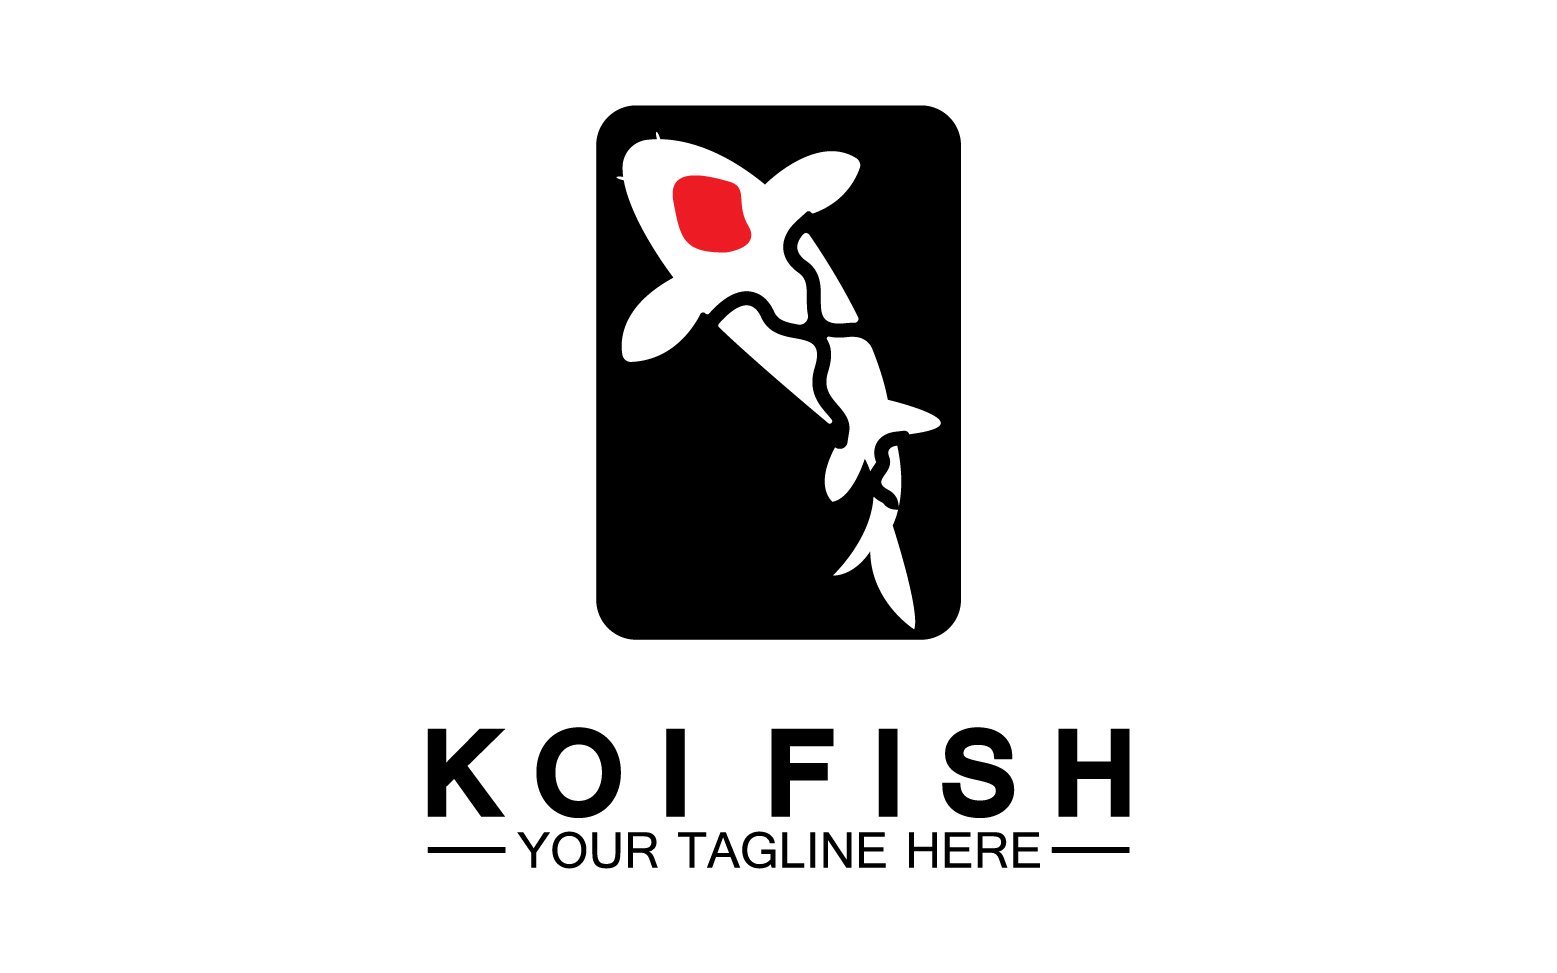 Fish koi black and red icon logo vector v35